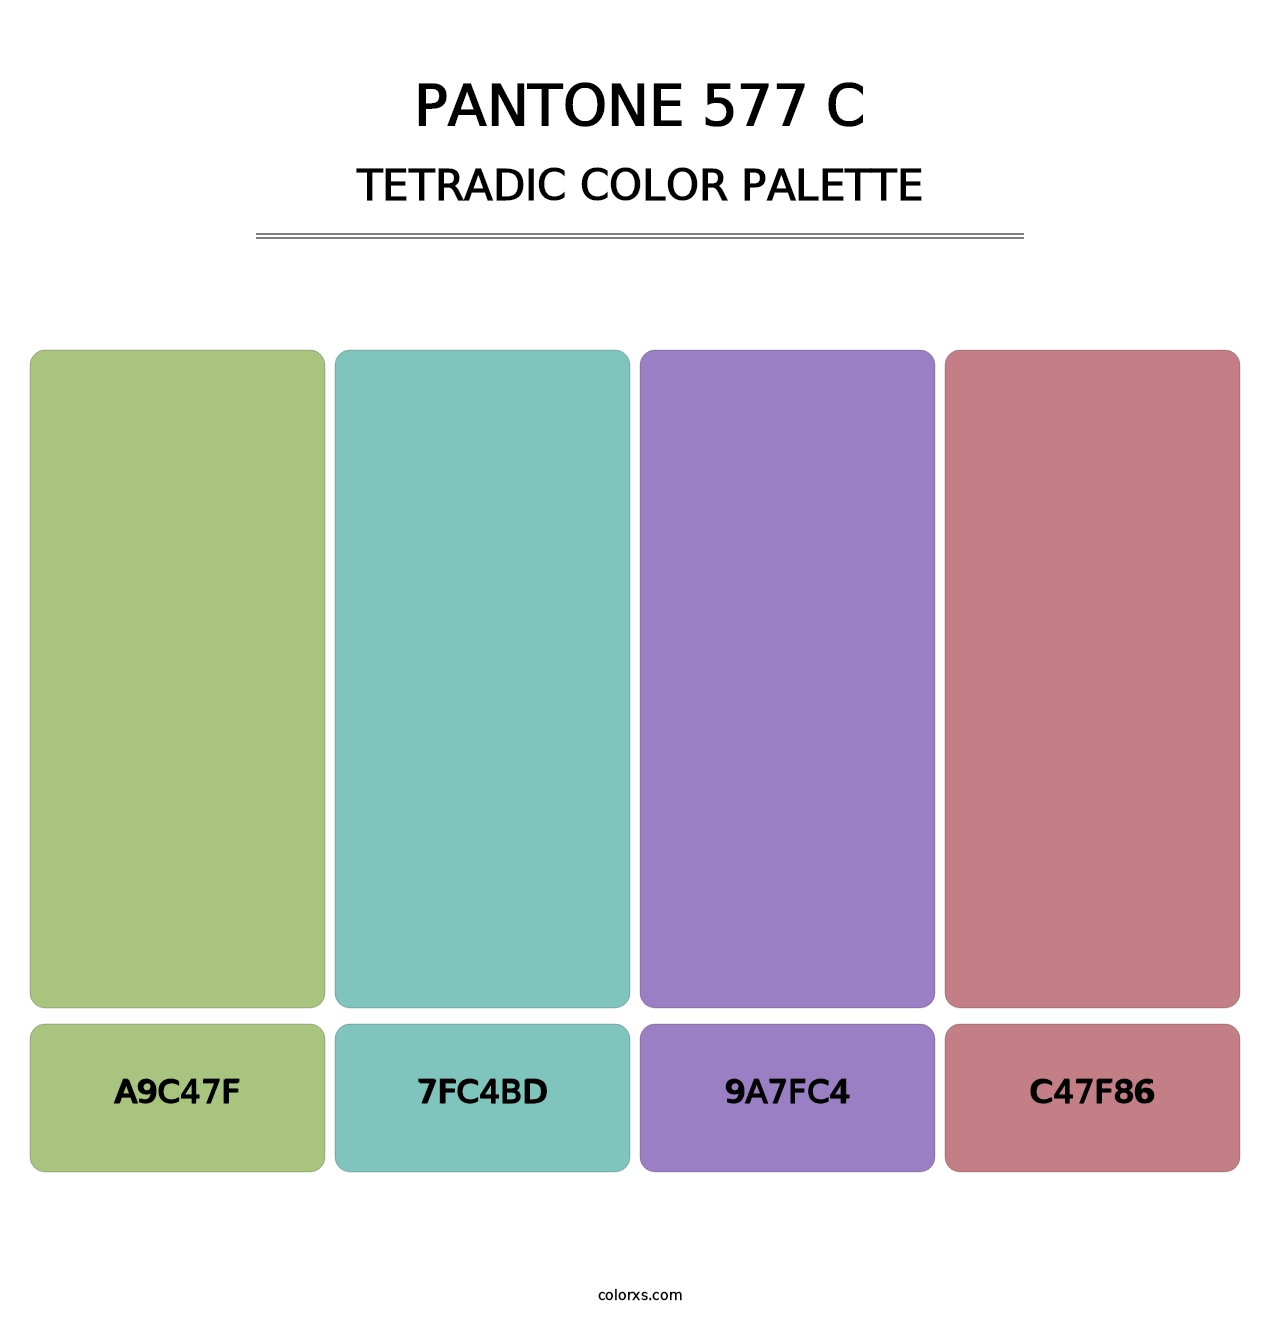 PANTONE 577 C - Tetradic Color Palette